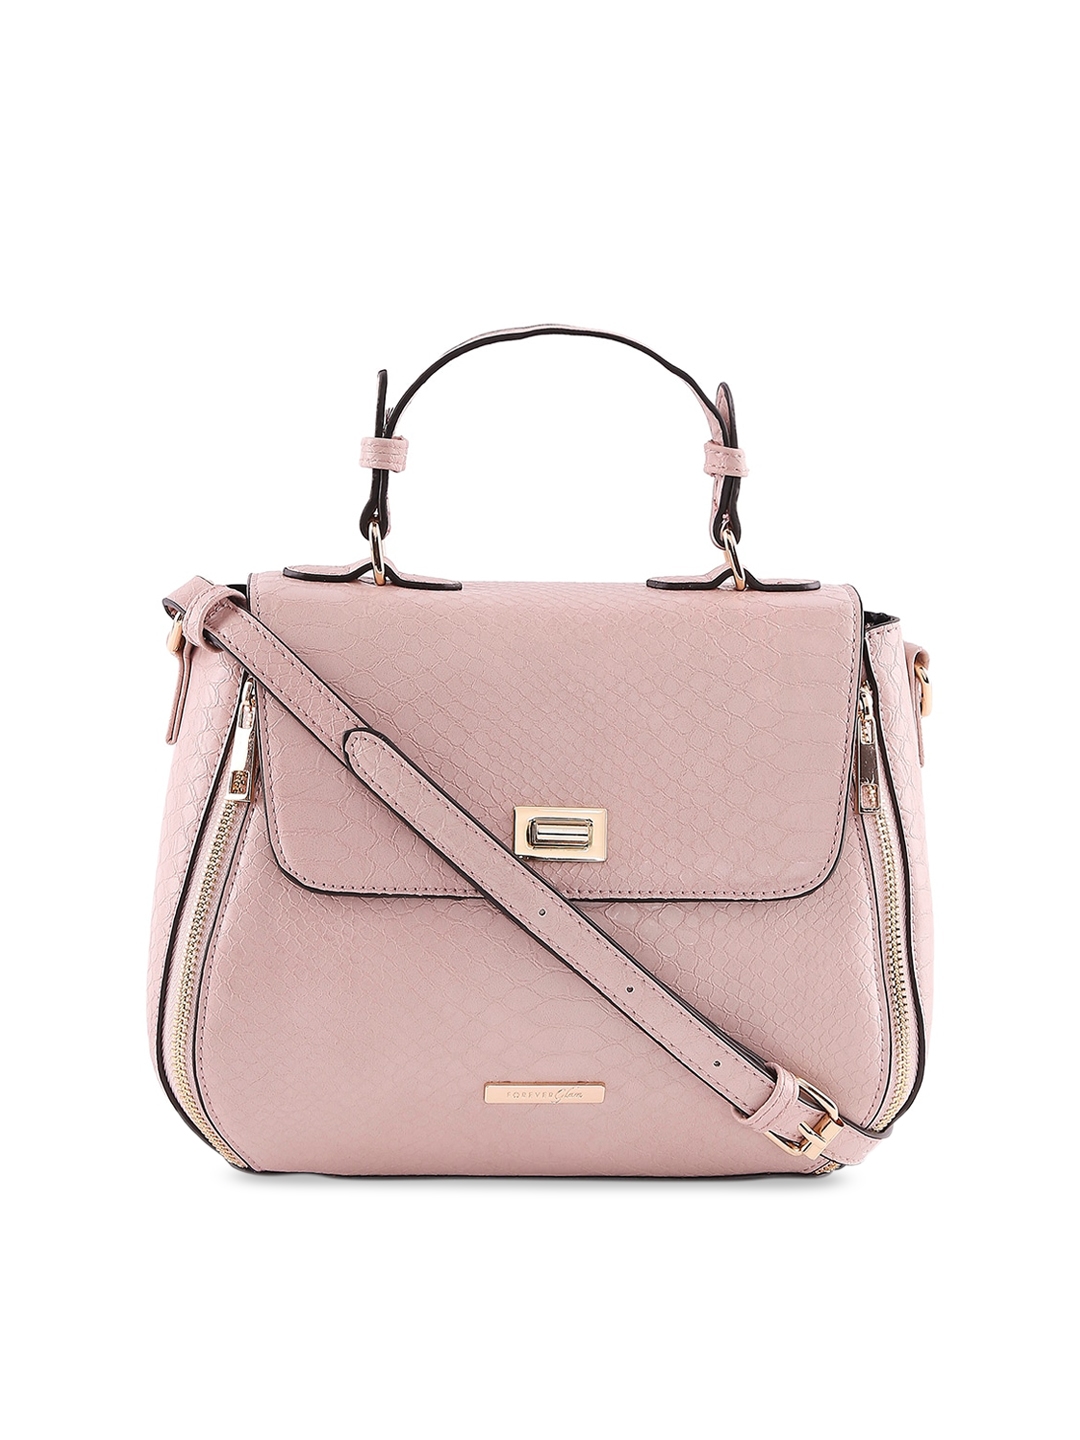 Enjoy 165+ forever glam purse latest